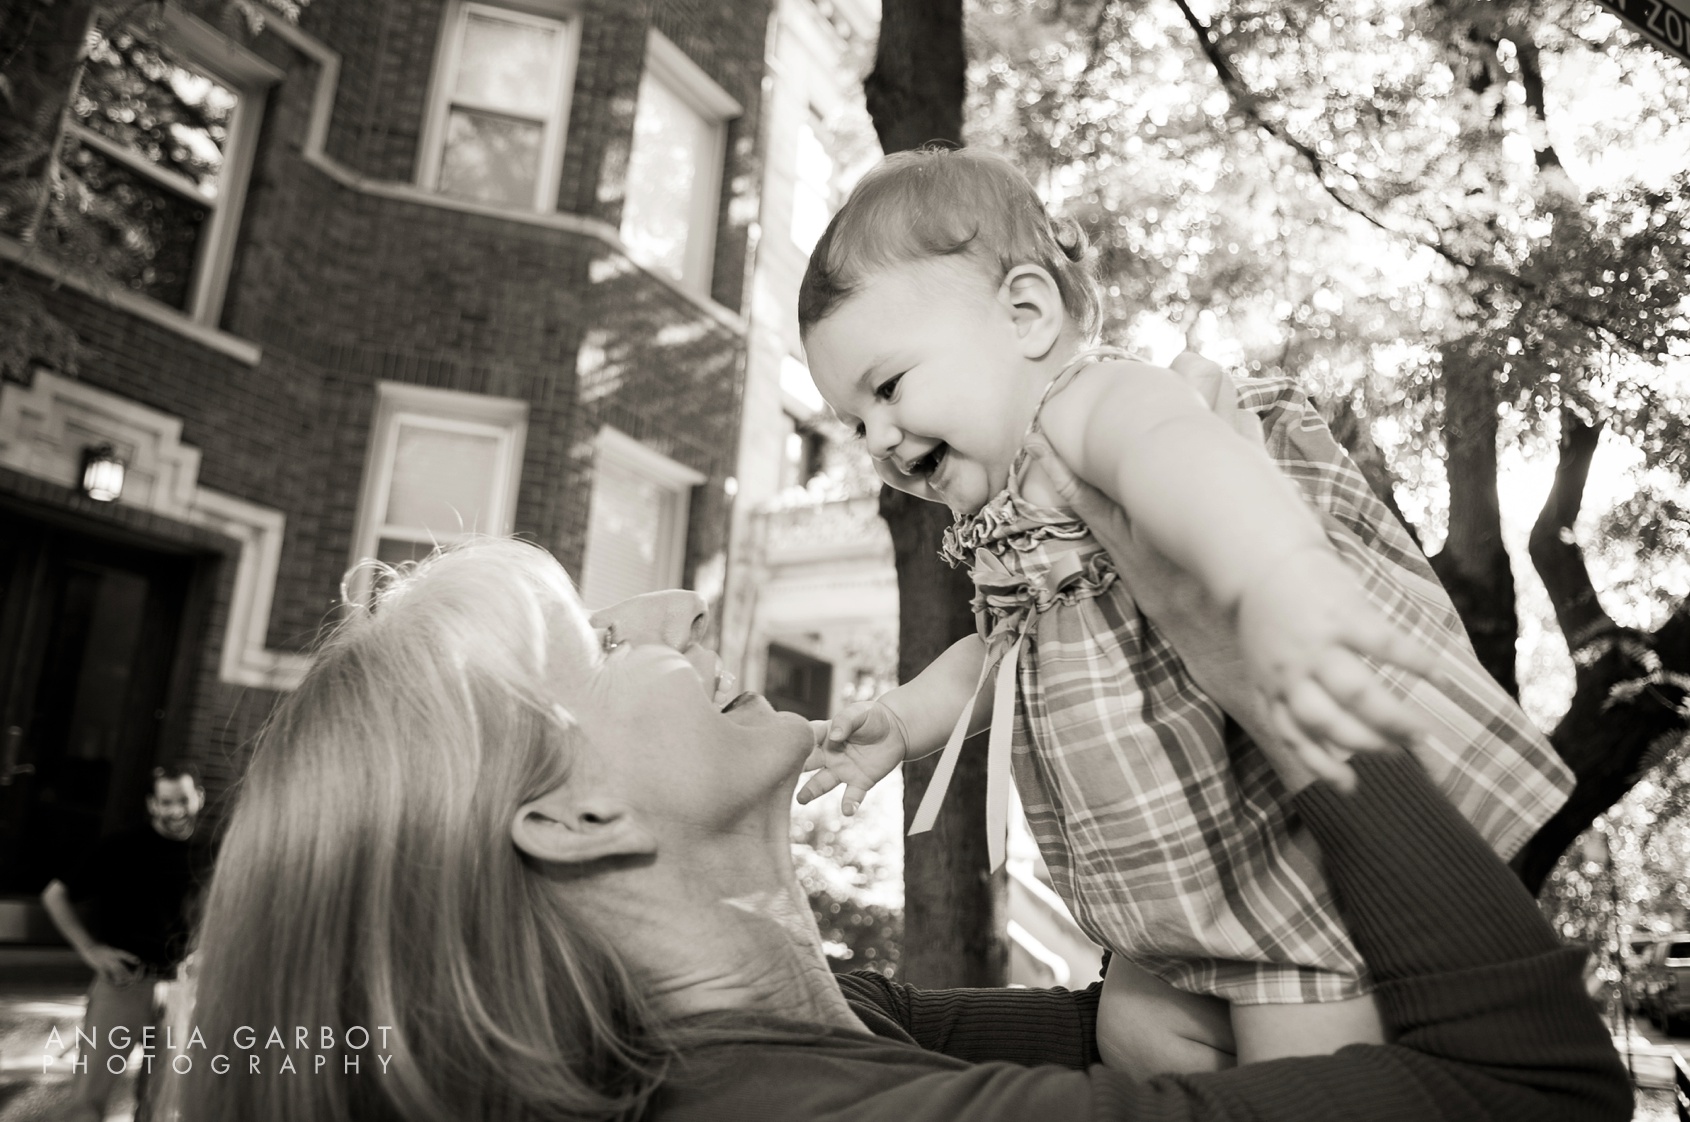 Mother's Day 2016 #charlottemothersday #chicagomothersday #mothersday #lifestylefamilyphotography #charlottefamily #chicagofamily ©2016 Angela Garbot http://www.AngelaGarbot.com